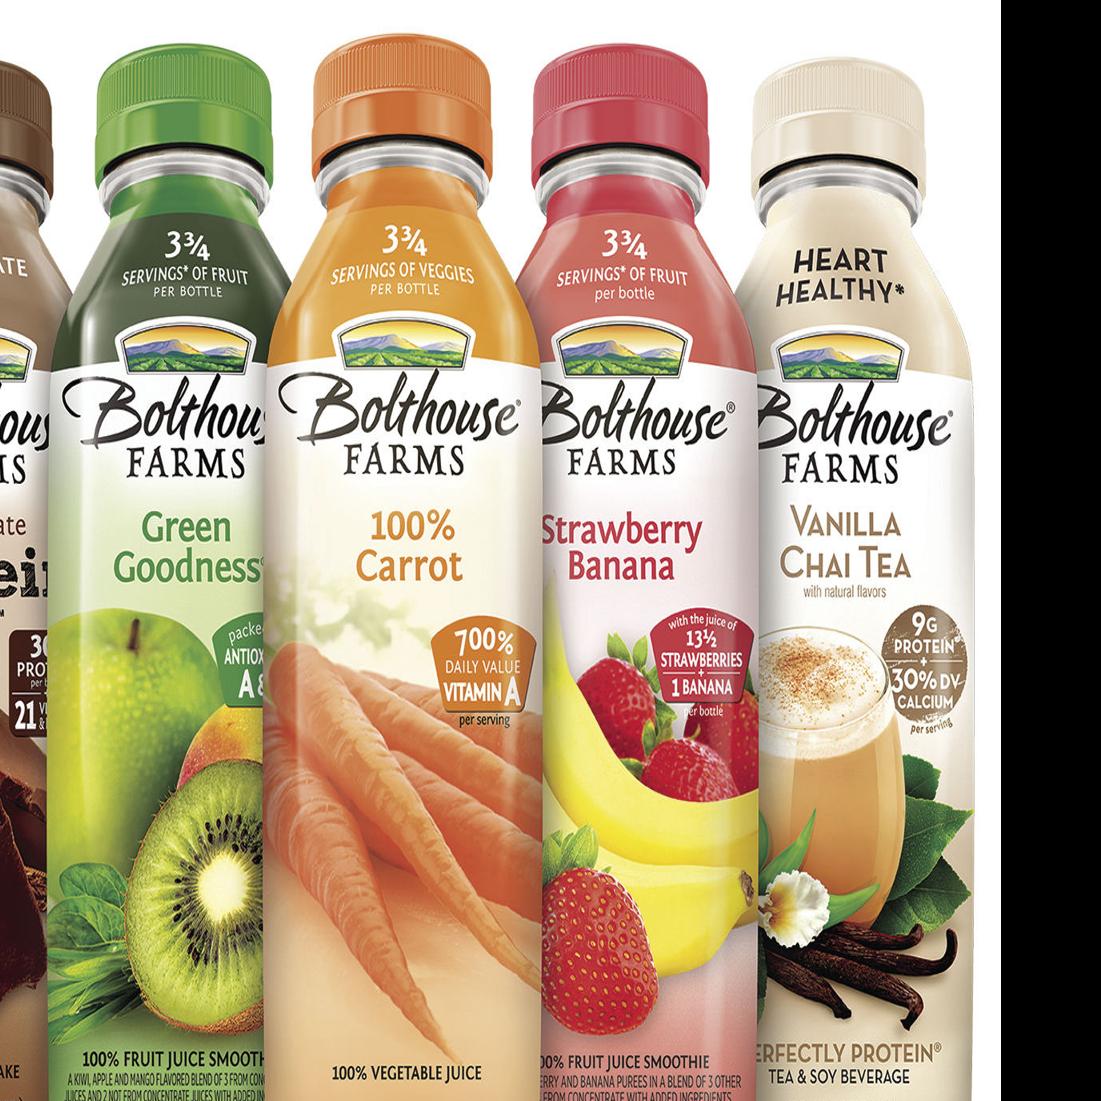 Bolthouse Farms Fruit Juice Smoothie, Strawberry Banana, 15.2 fl. oz. Bottle